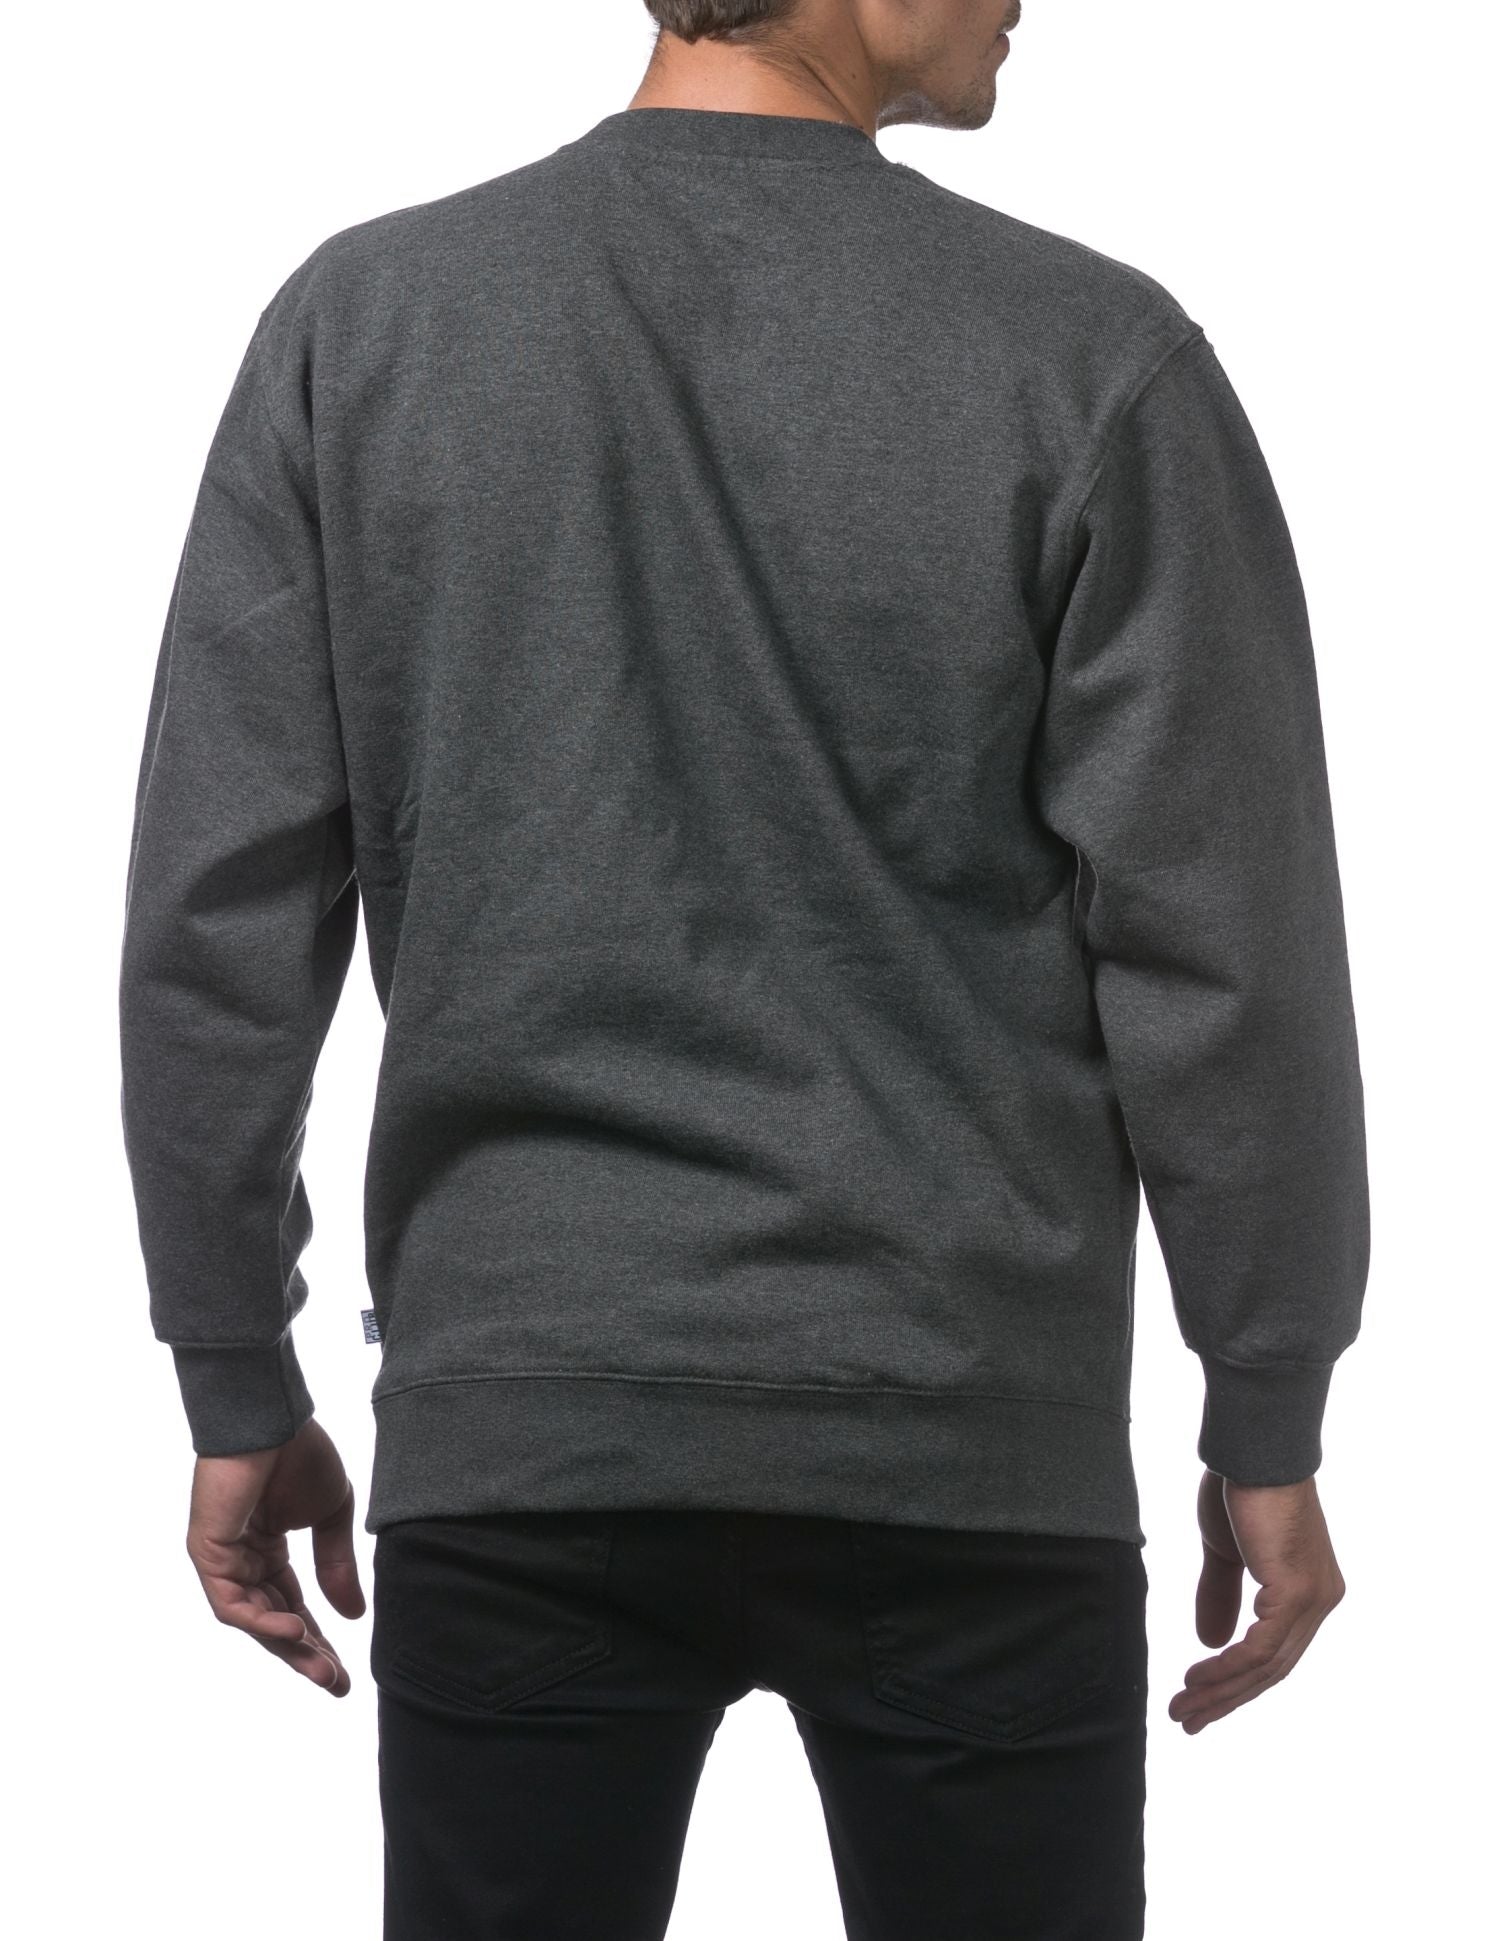 Pro Club Men's Comfort Crew Neck Fleece Pullover Sweater - Charcoal - Small - Pro-Distributing